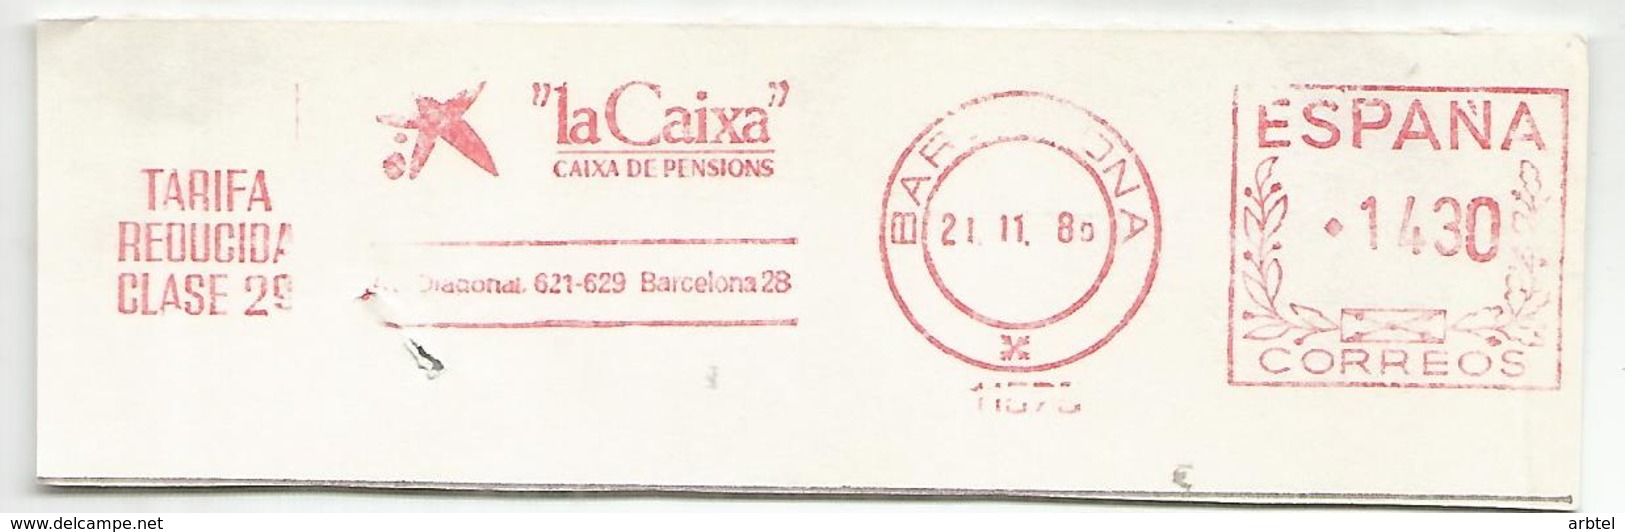 ESPAÑA FRANQUEO MECANICO METER BARCELONA LA CAIXA BANK MIRO - Cartas & Documentos